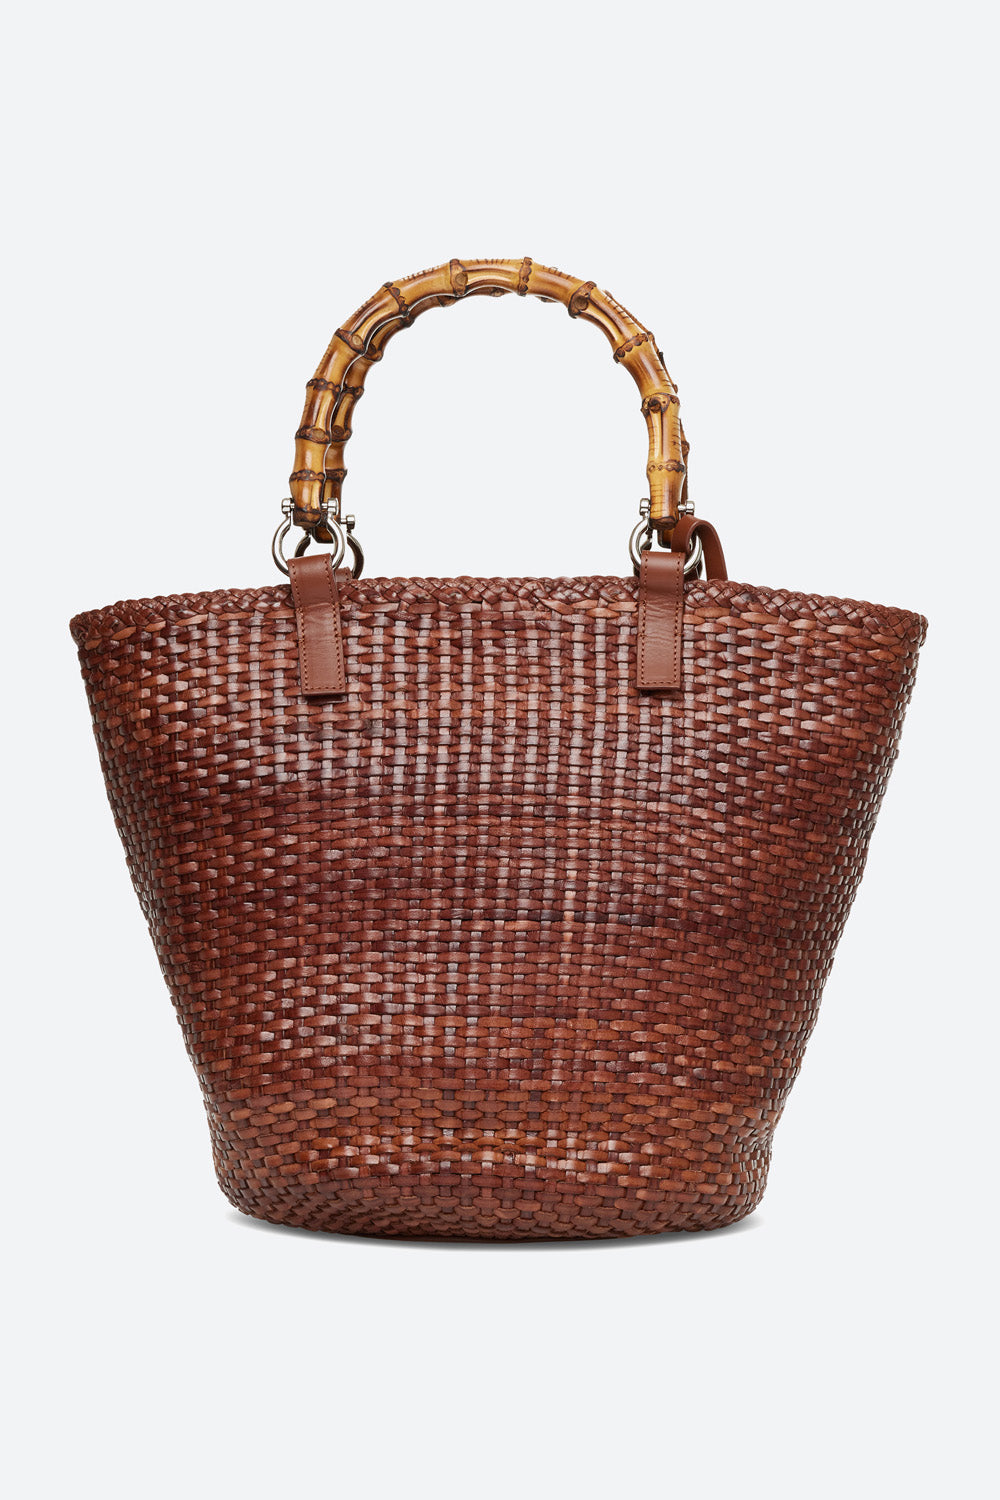 IMARS Stylish Handbag Multi Color For Women & Girls (Basket Bag) Made – Wemy